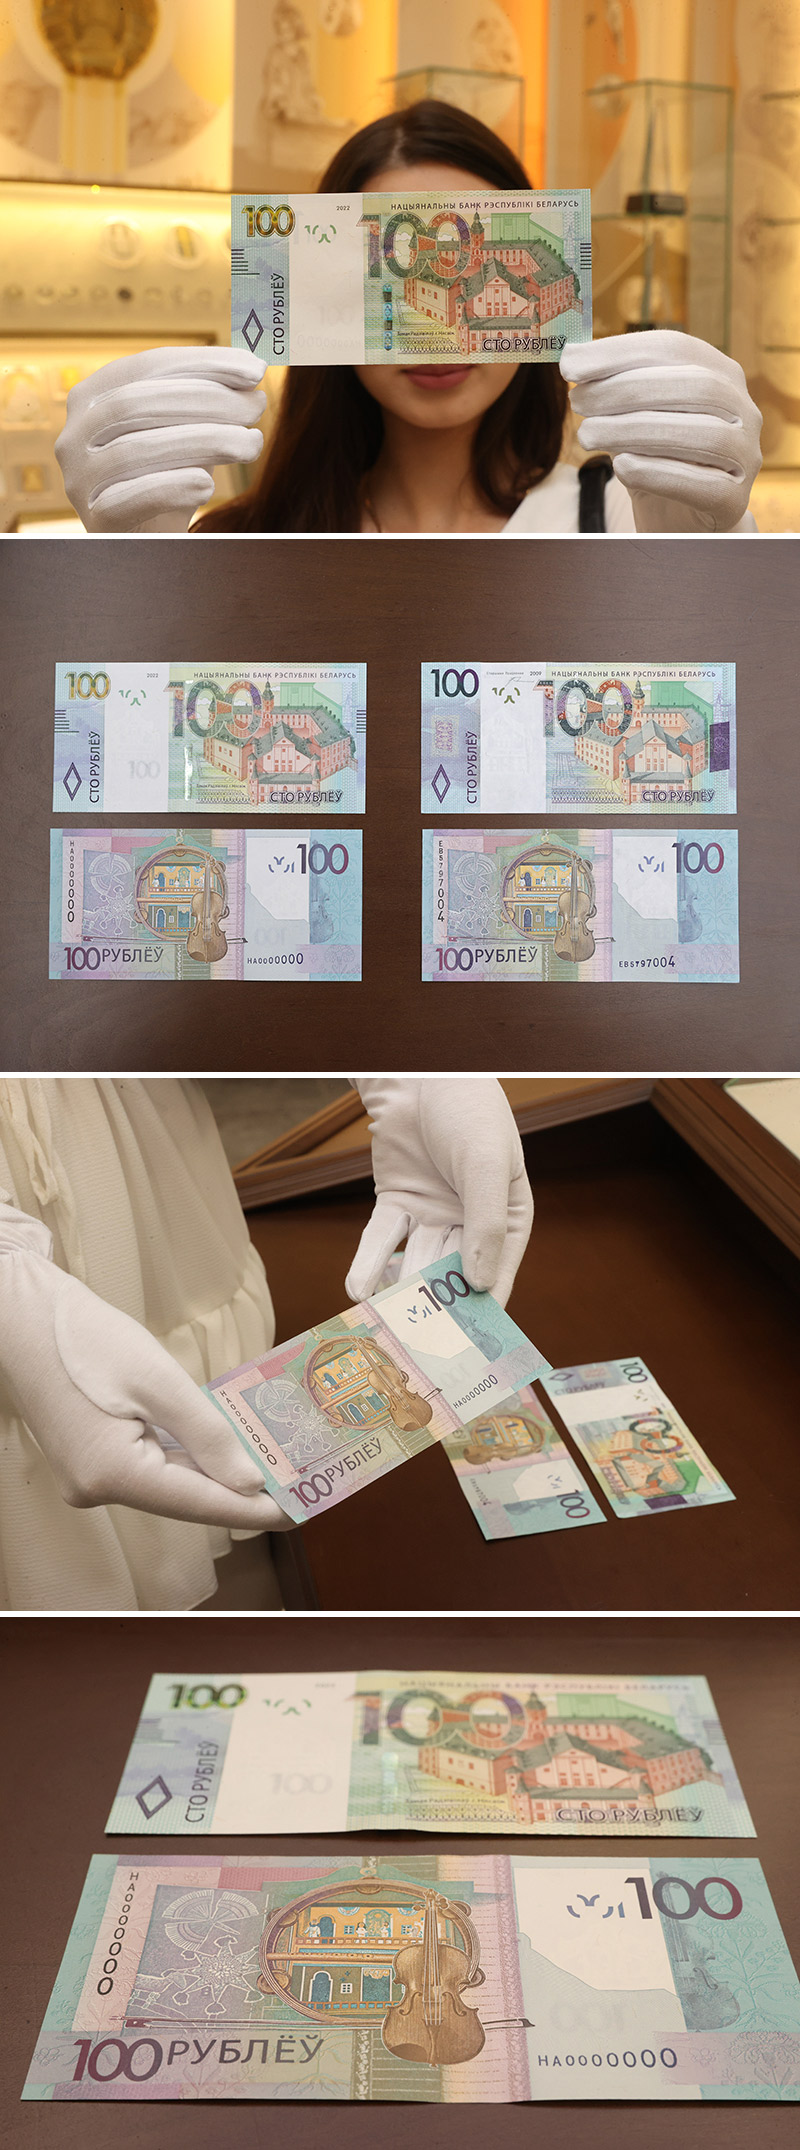 Belarusian money: Br100 banknotes